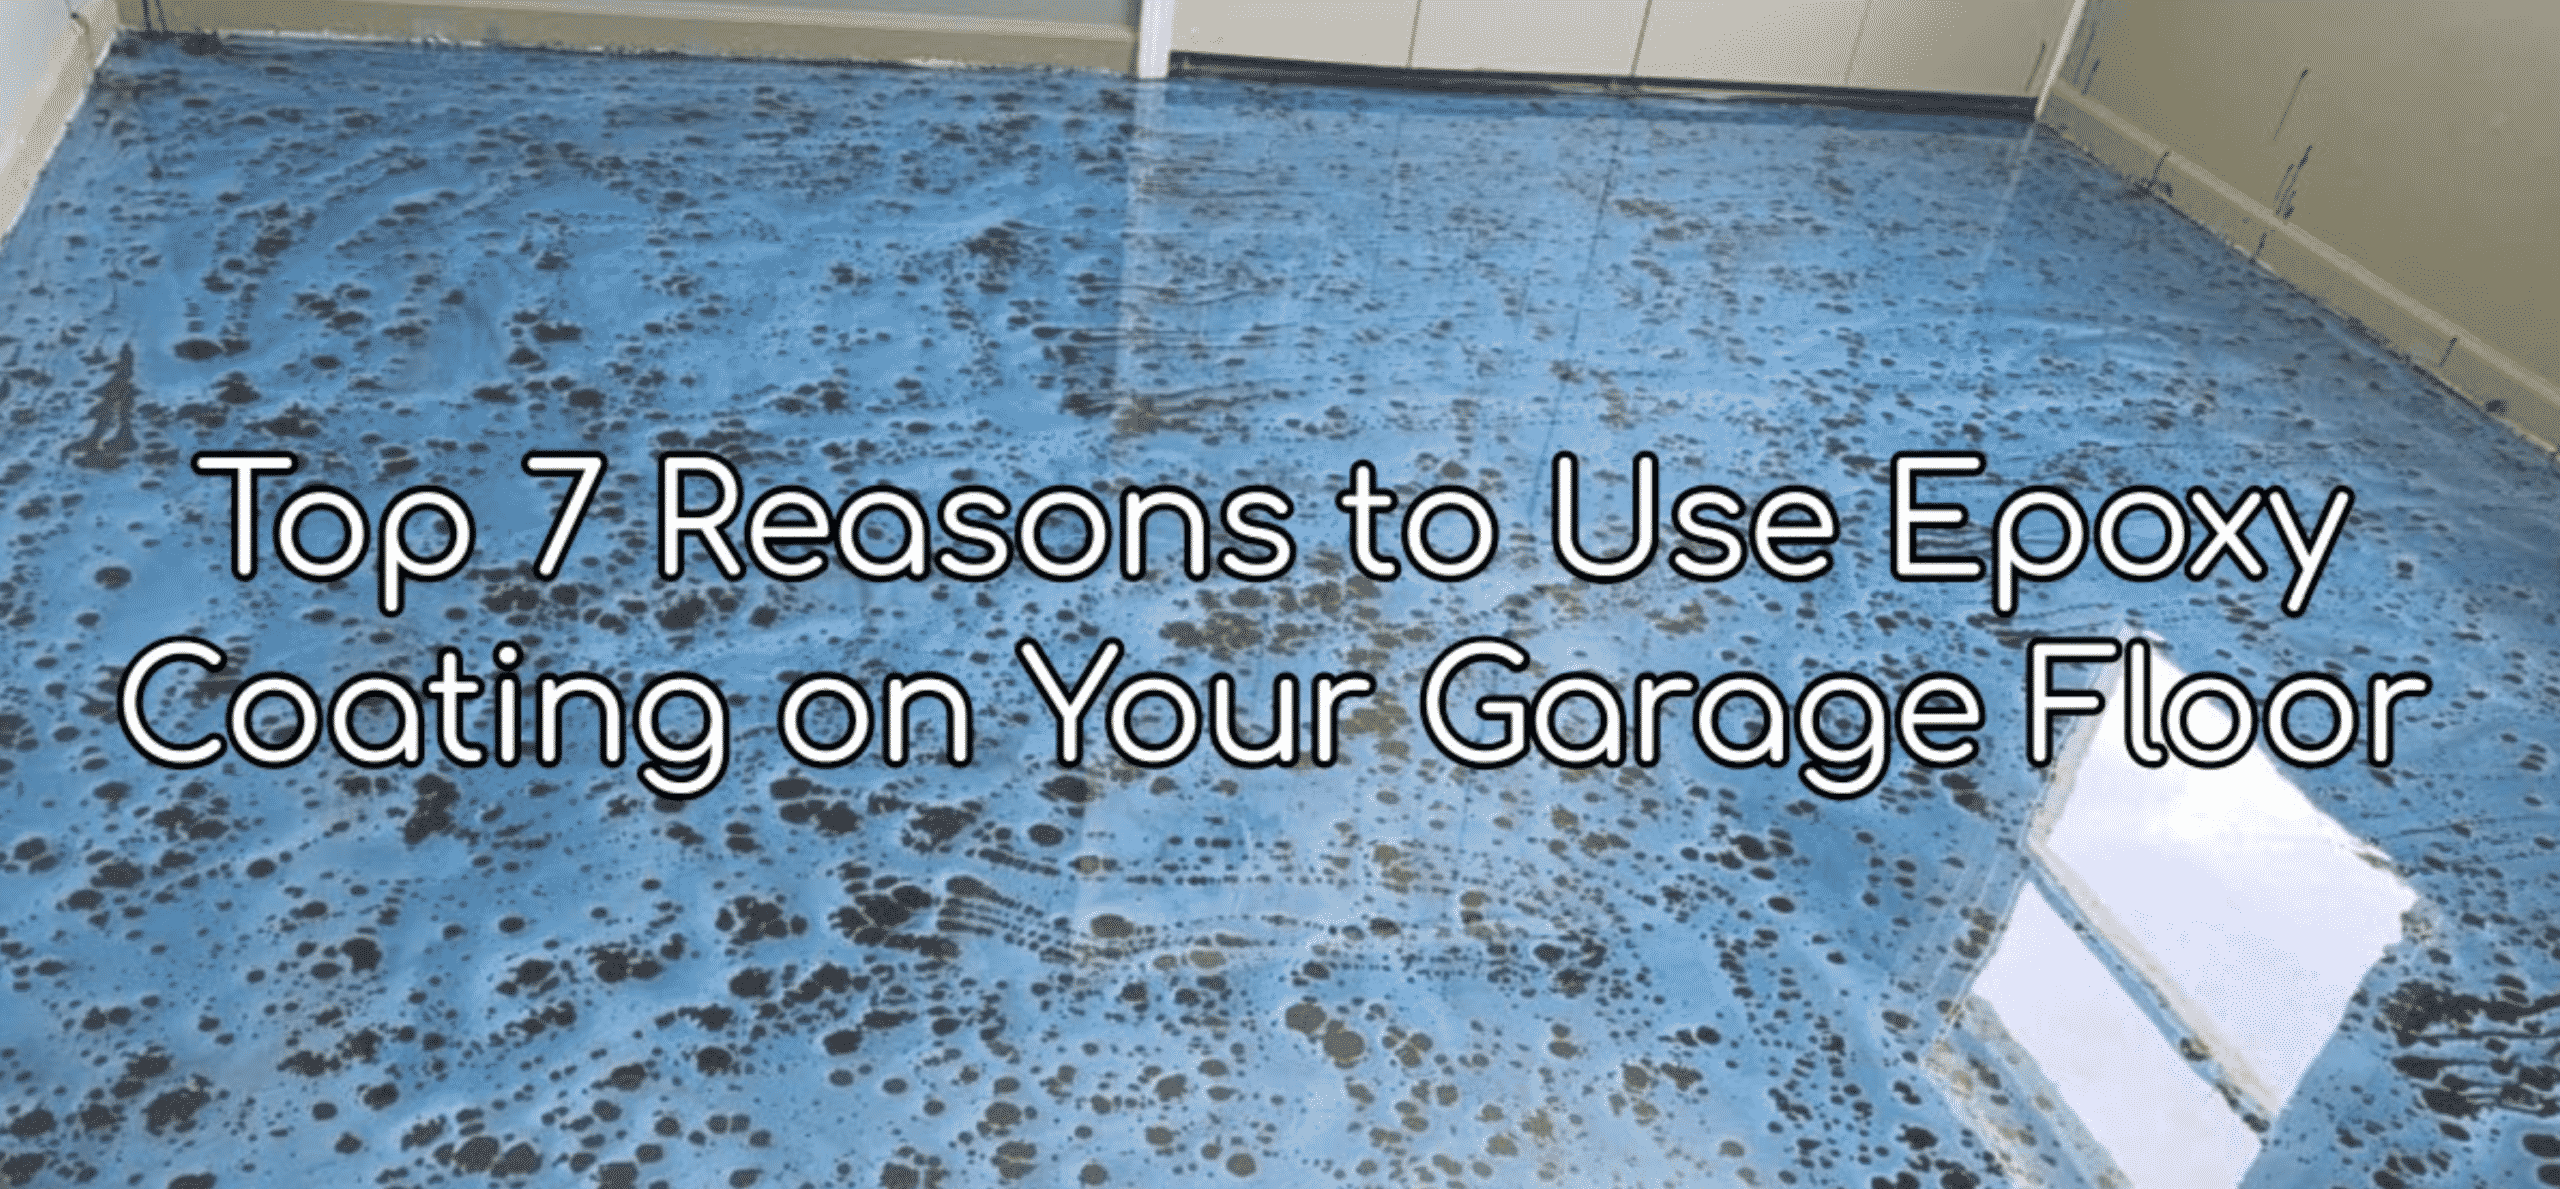 Top 7 Reasons to Use Epoxy Coating on Your Garage Floor